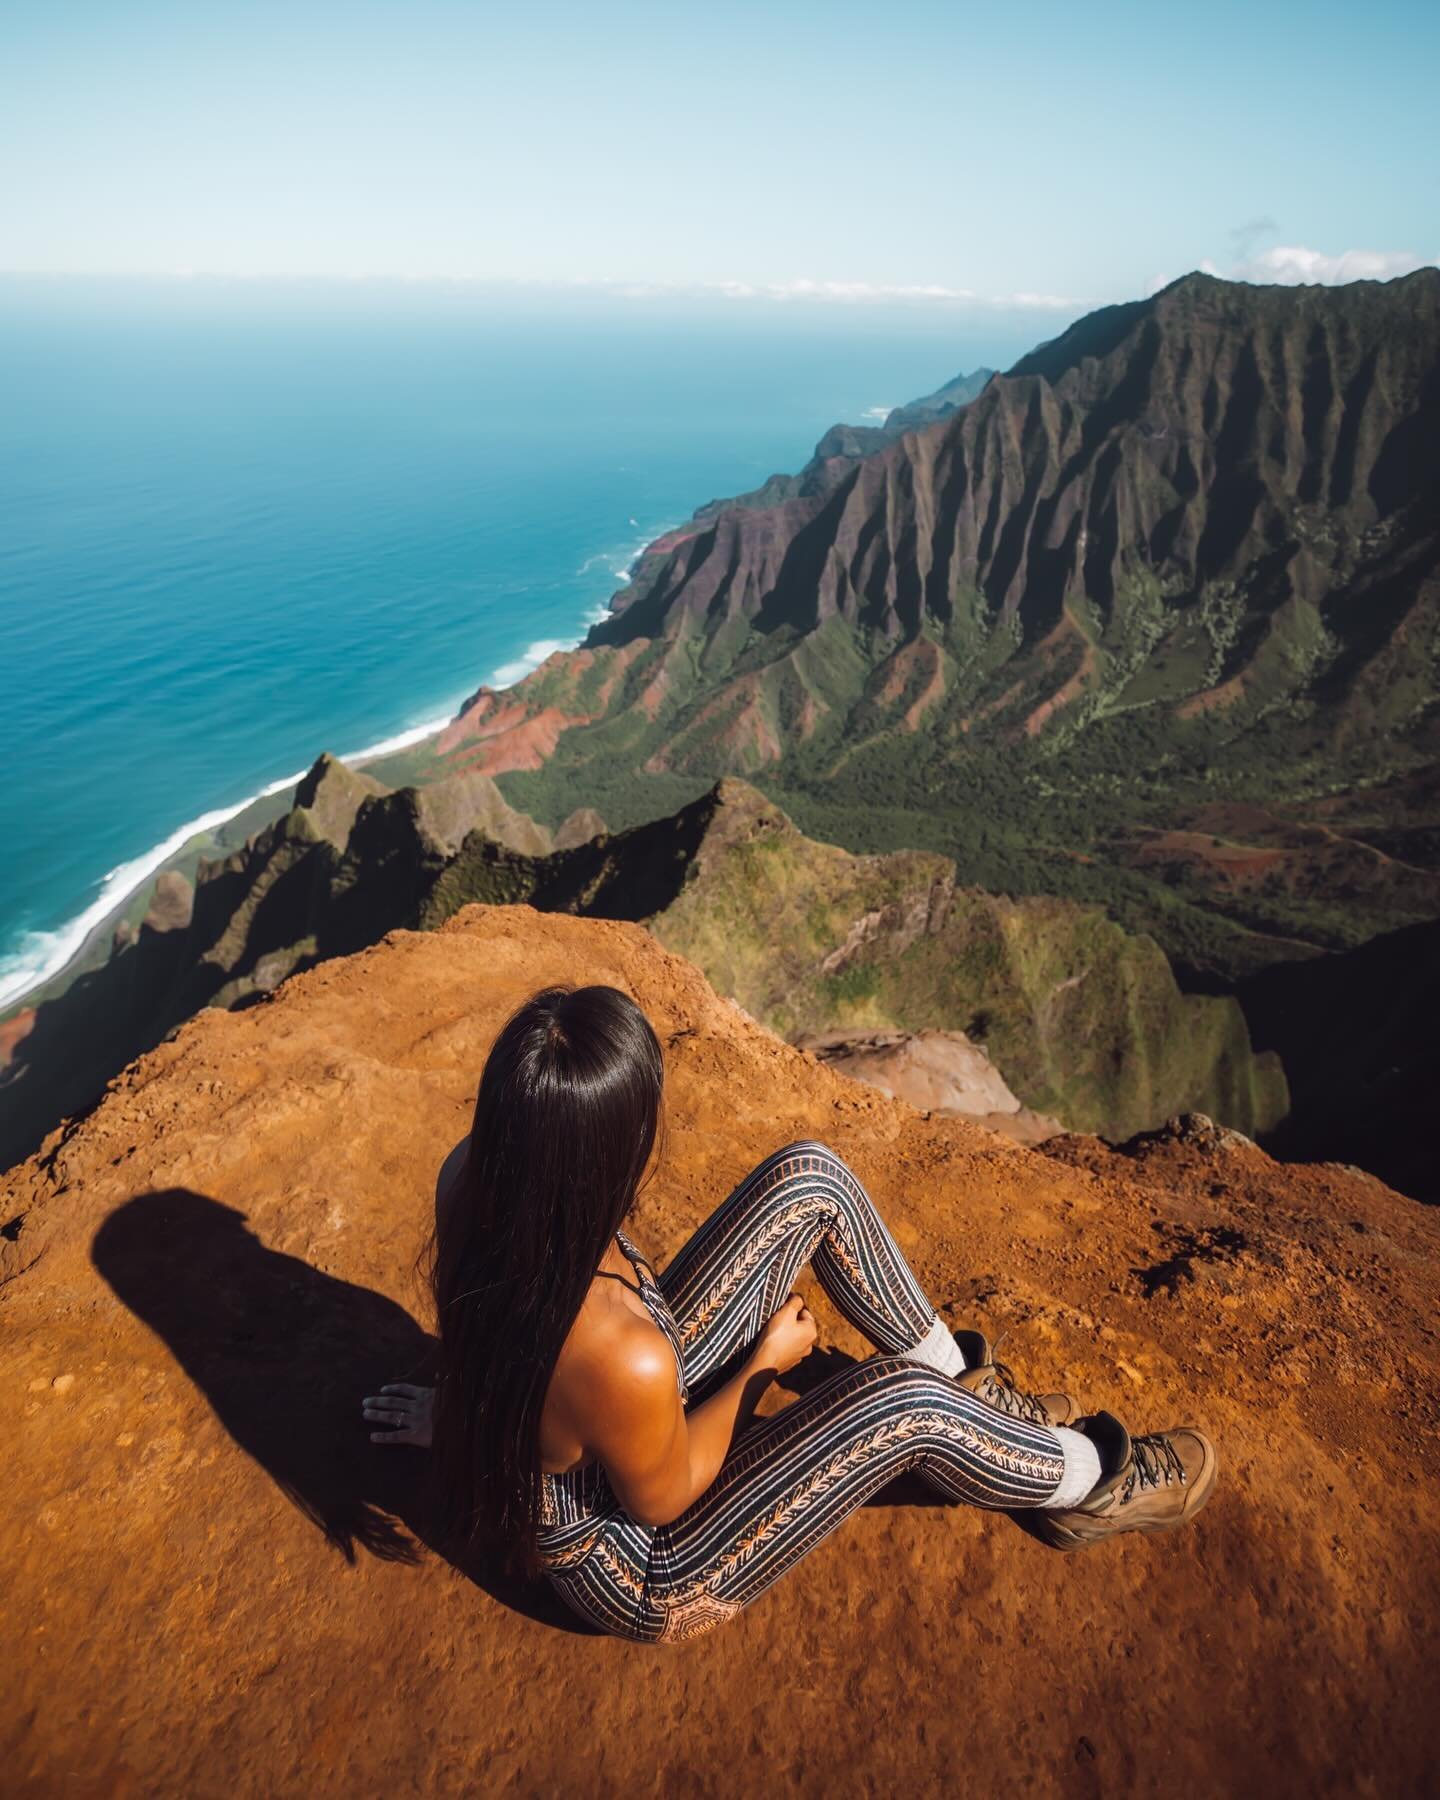 When you match with earth 🌎 

My favorite island in Hawaii! I want to go back 🧡

&mdash;
#hawaii #kauai #explorehawaii #hawaiilove #kauaihawaii #explorehawaii #earthfocus #earth #kauaibeauty #travelphotography #naturecaptures #natureporn #islandliv